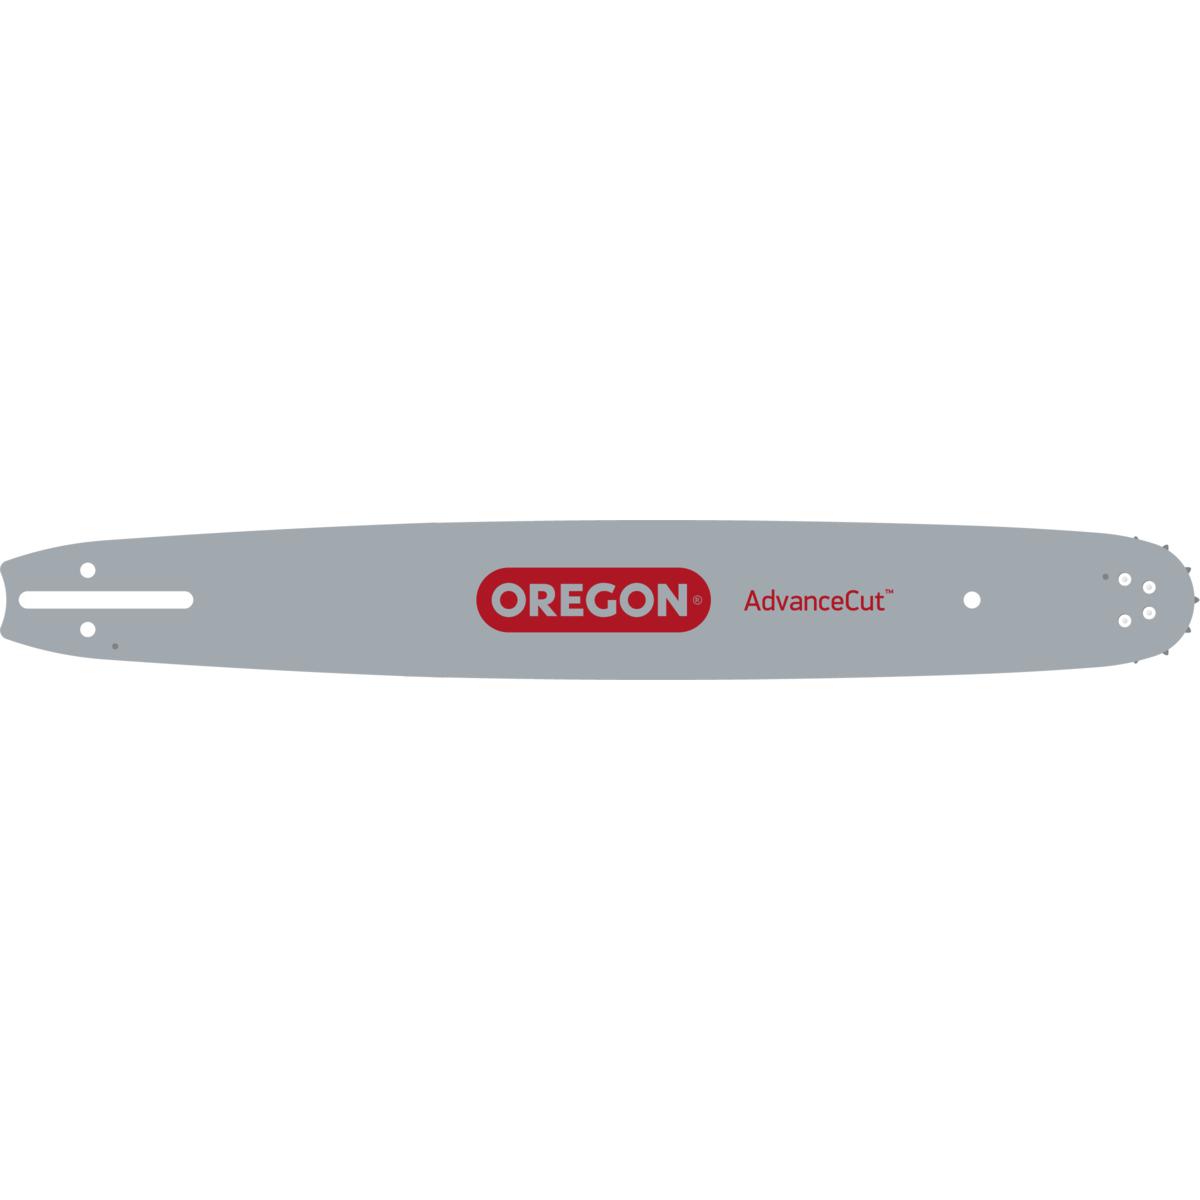 Guide Bar 𝑃3/8"/9.32𝑚𝑚 AdvanceCut Oregon-Guide Bar-Oregon-50cm/𝑇1.5𝑚𝑚/25RM-72L-diyshop.co.za